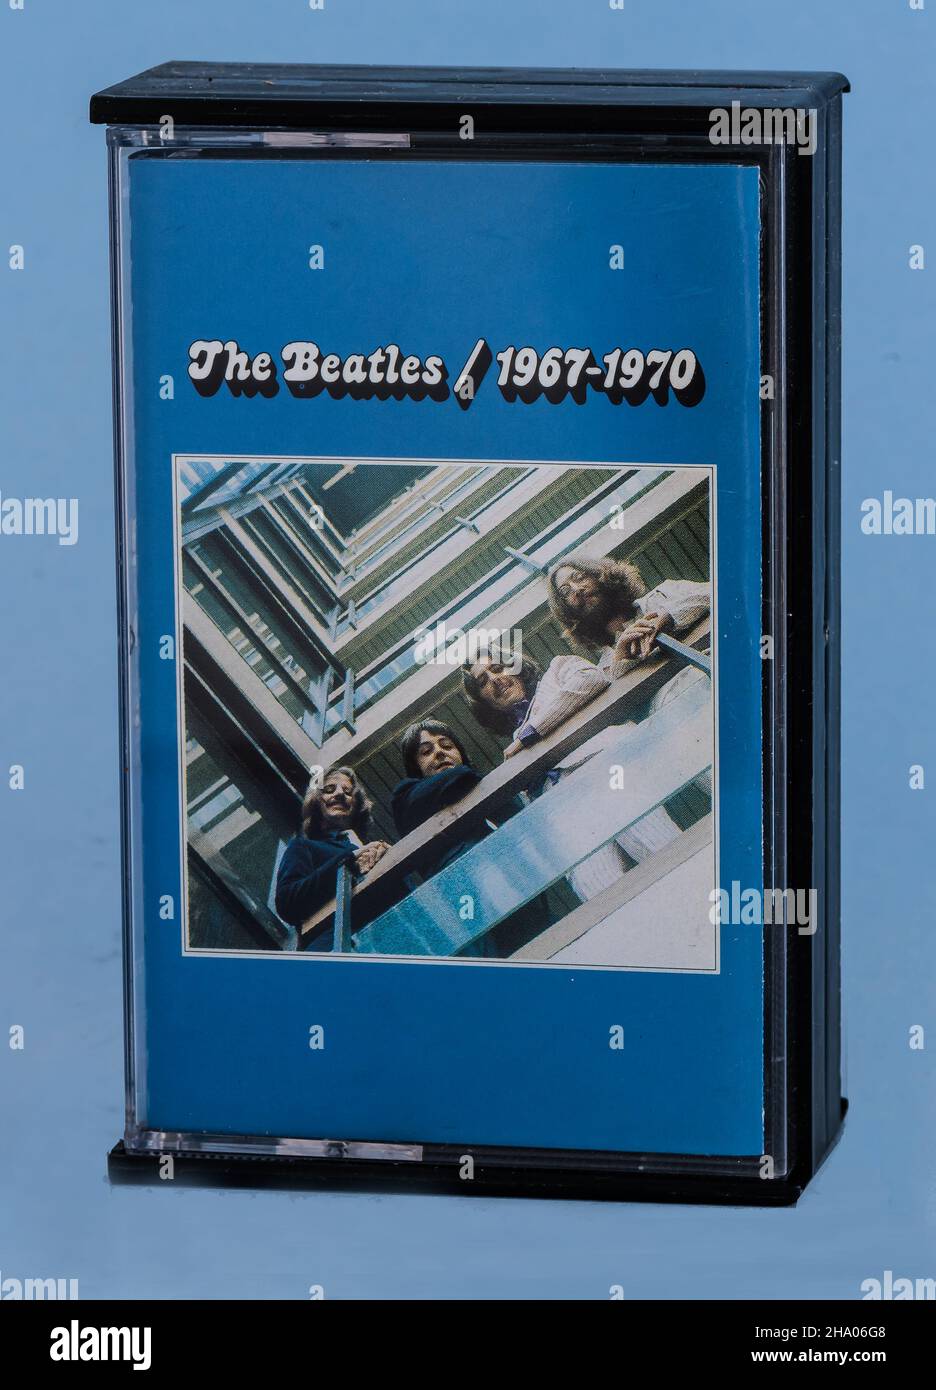 EMI Cassette - The Beatles / 1967-1970. Stock Photo